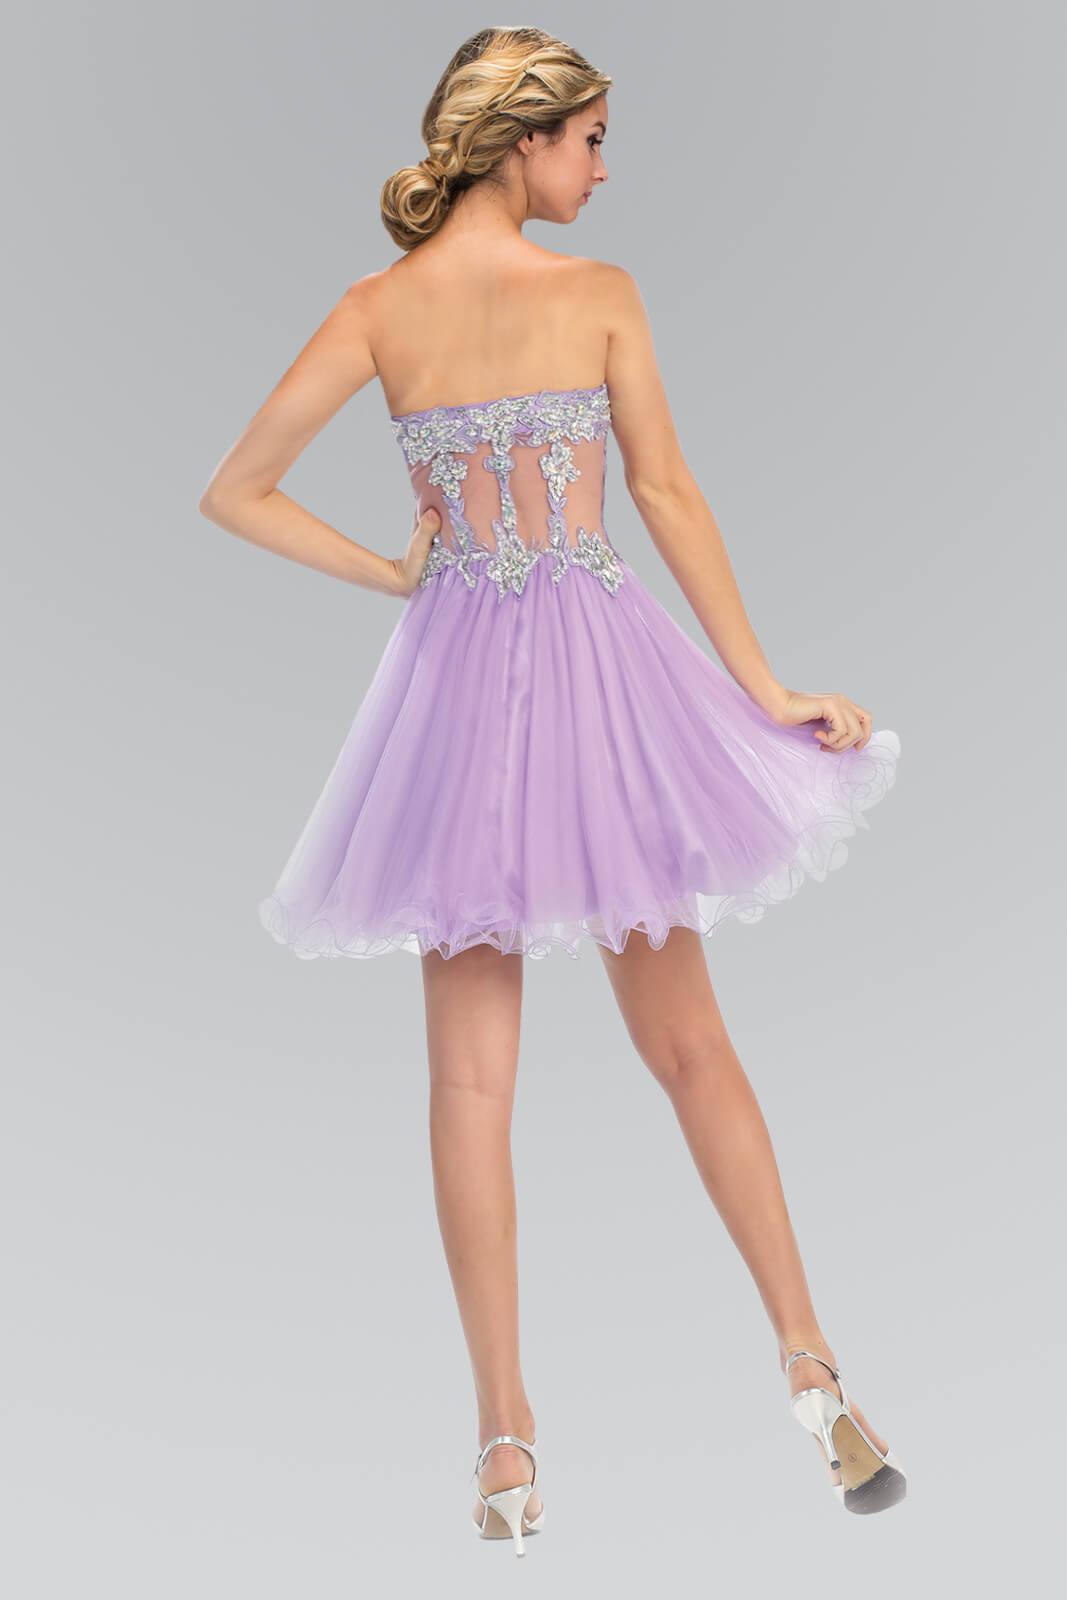 Sexy Sweetheart Short Prom Dress - The Dress Outlet Elizabeth K